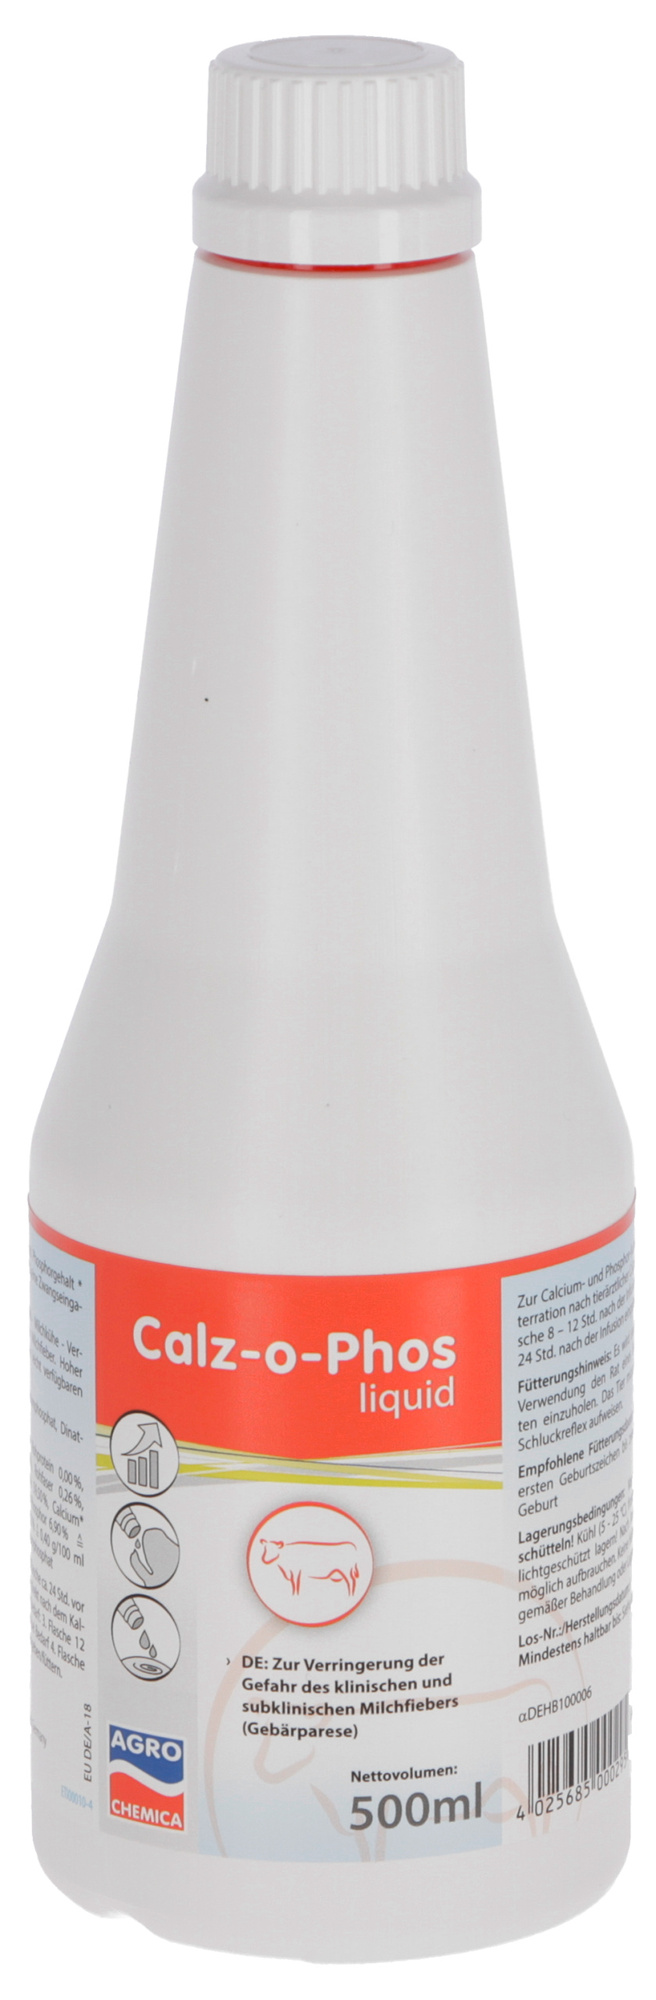 Agrochemica Ergänzungsfuttermittel Calz-o-Phos liquid - 500 ml